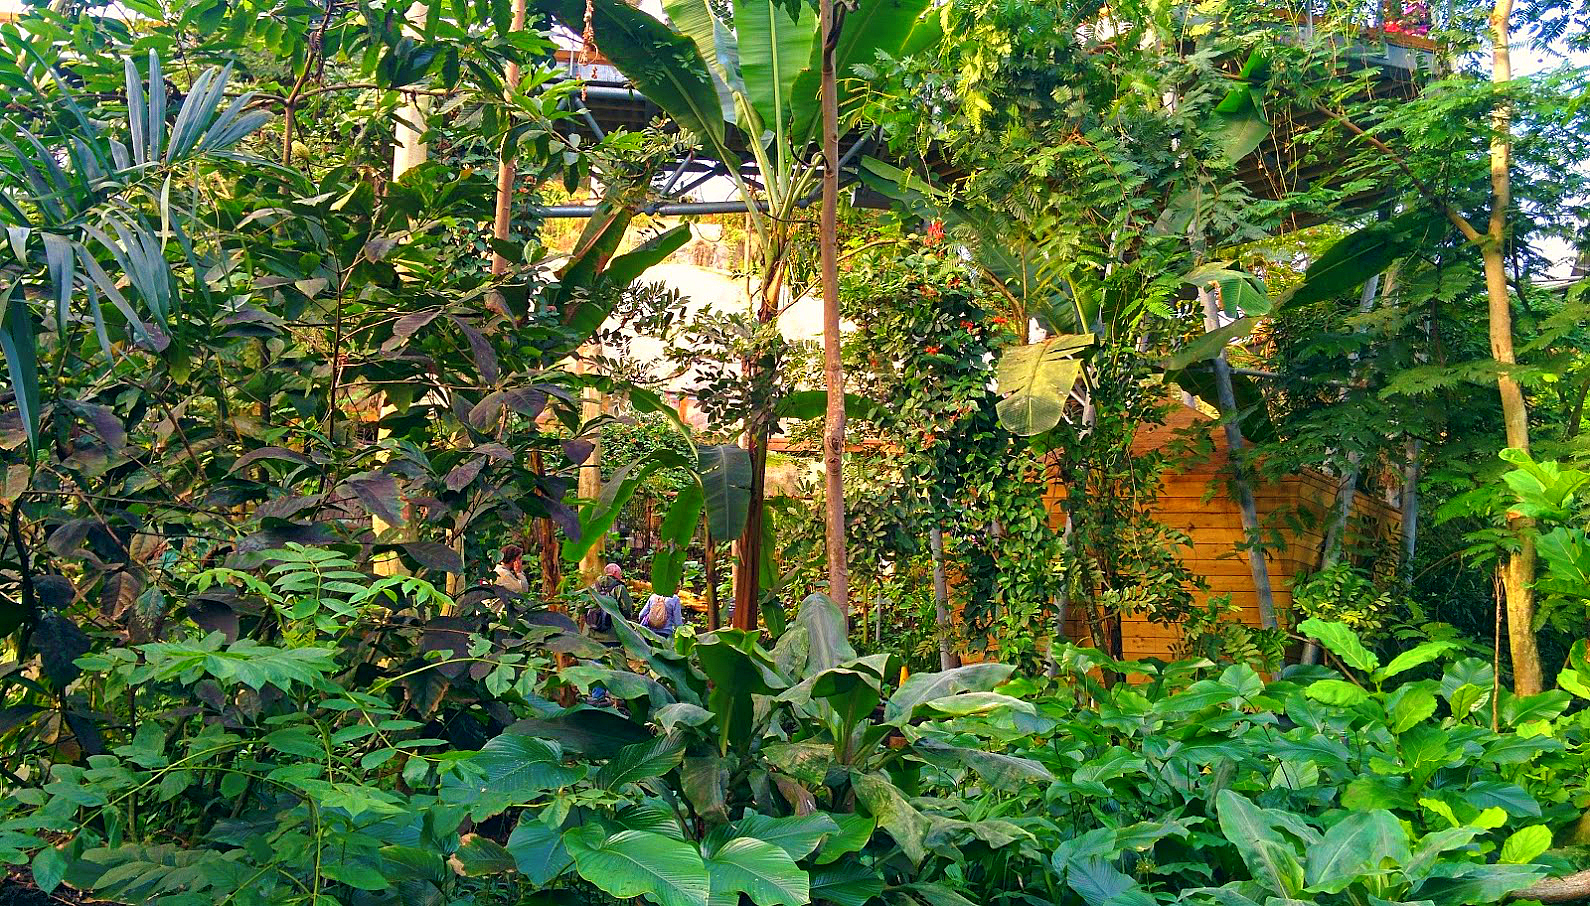 Eden Project Rainforest Biome Vegetation